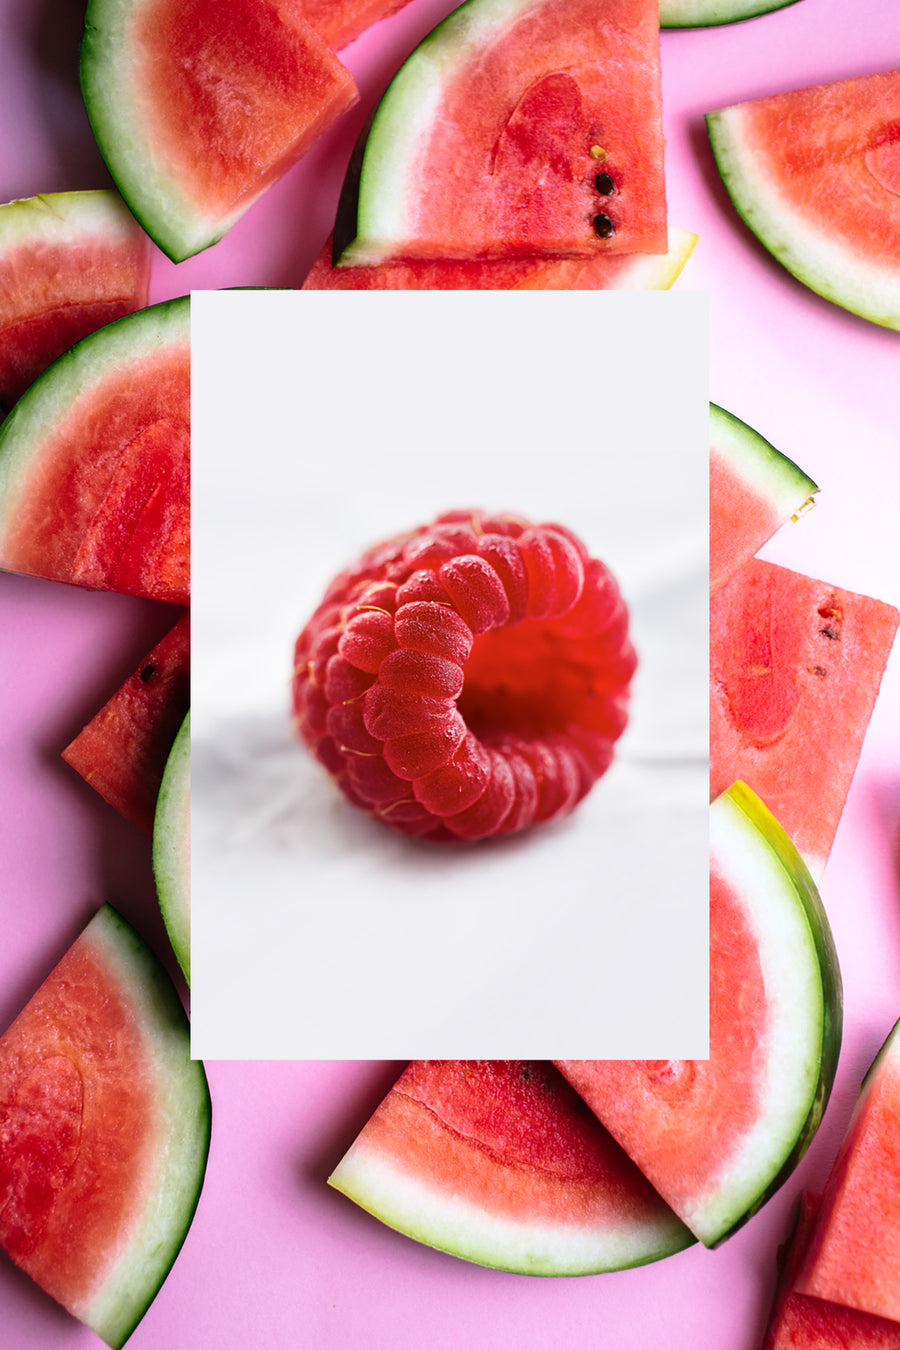 A single fresh raspberry with fresh watermelon slices